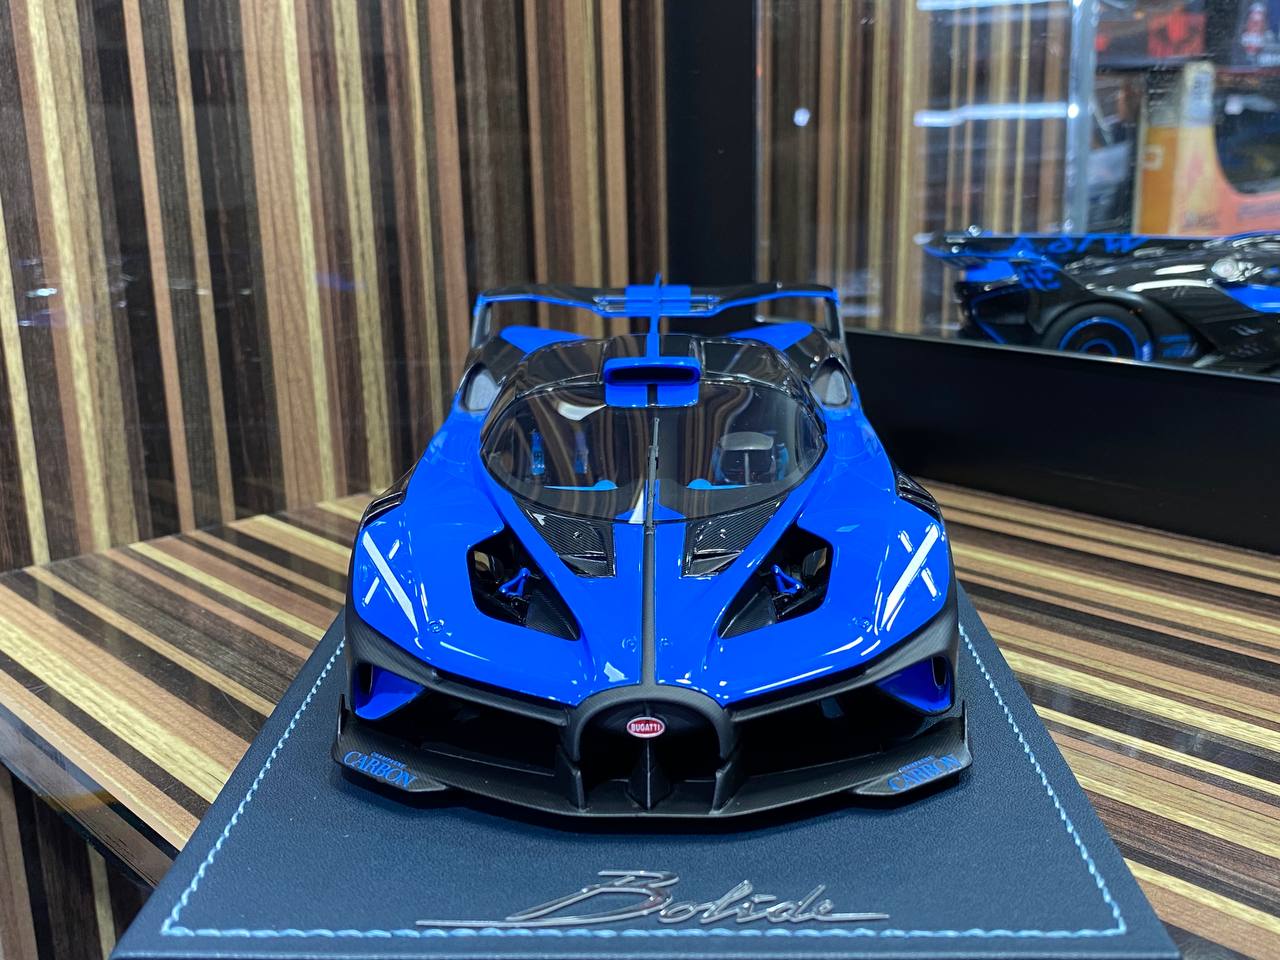 1/18 Resin MR Collection  - Bugatti Bolide in Striking Blue Model Car|Sold in Dturman.com Dubai UAE.